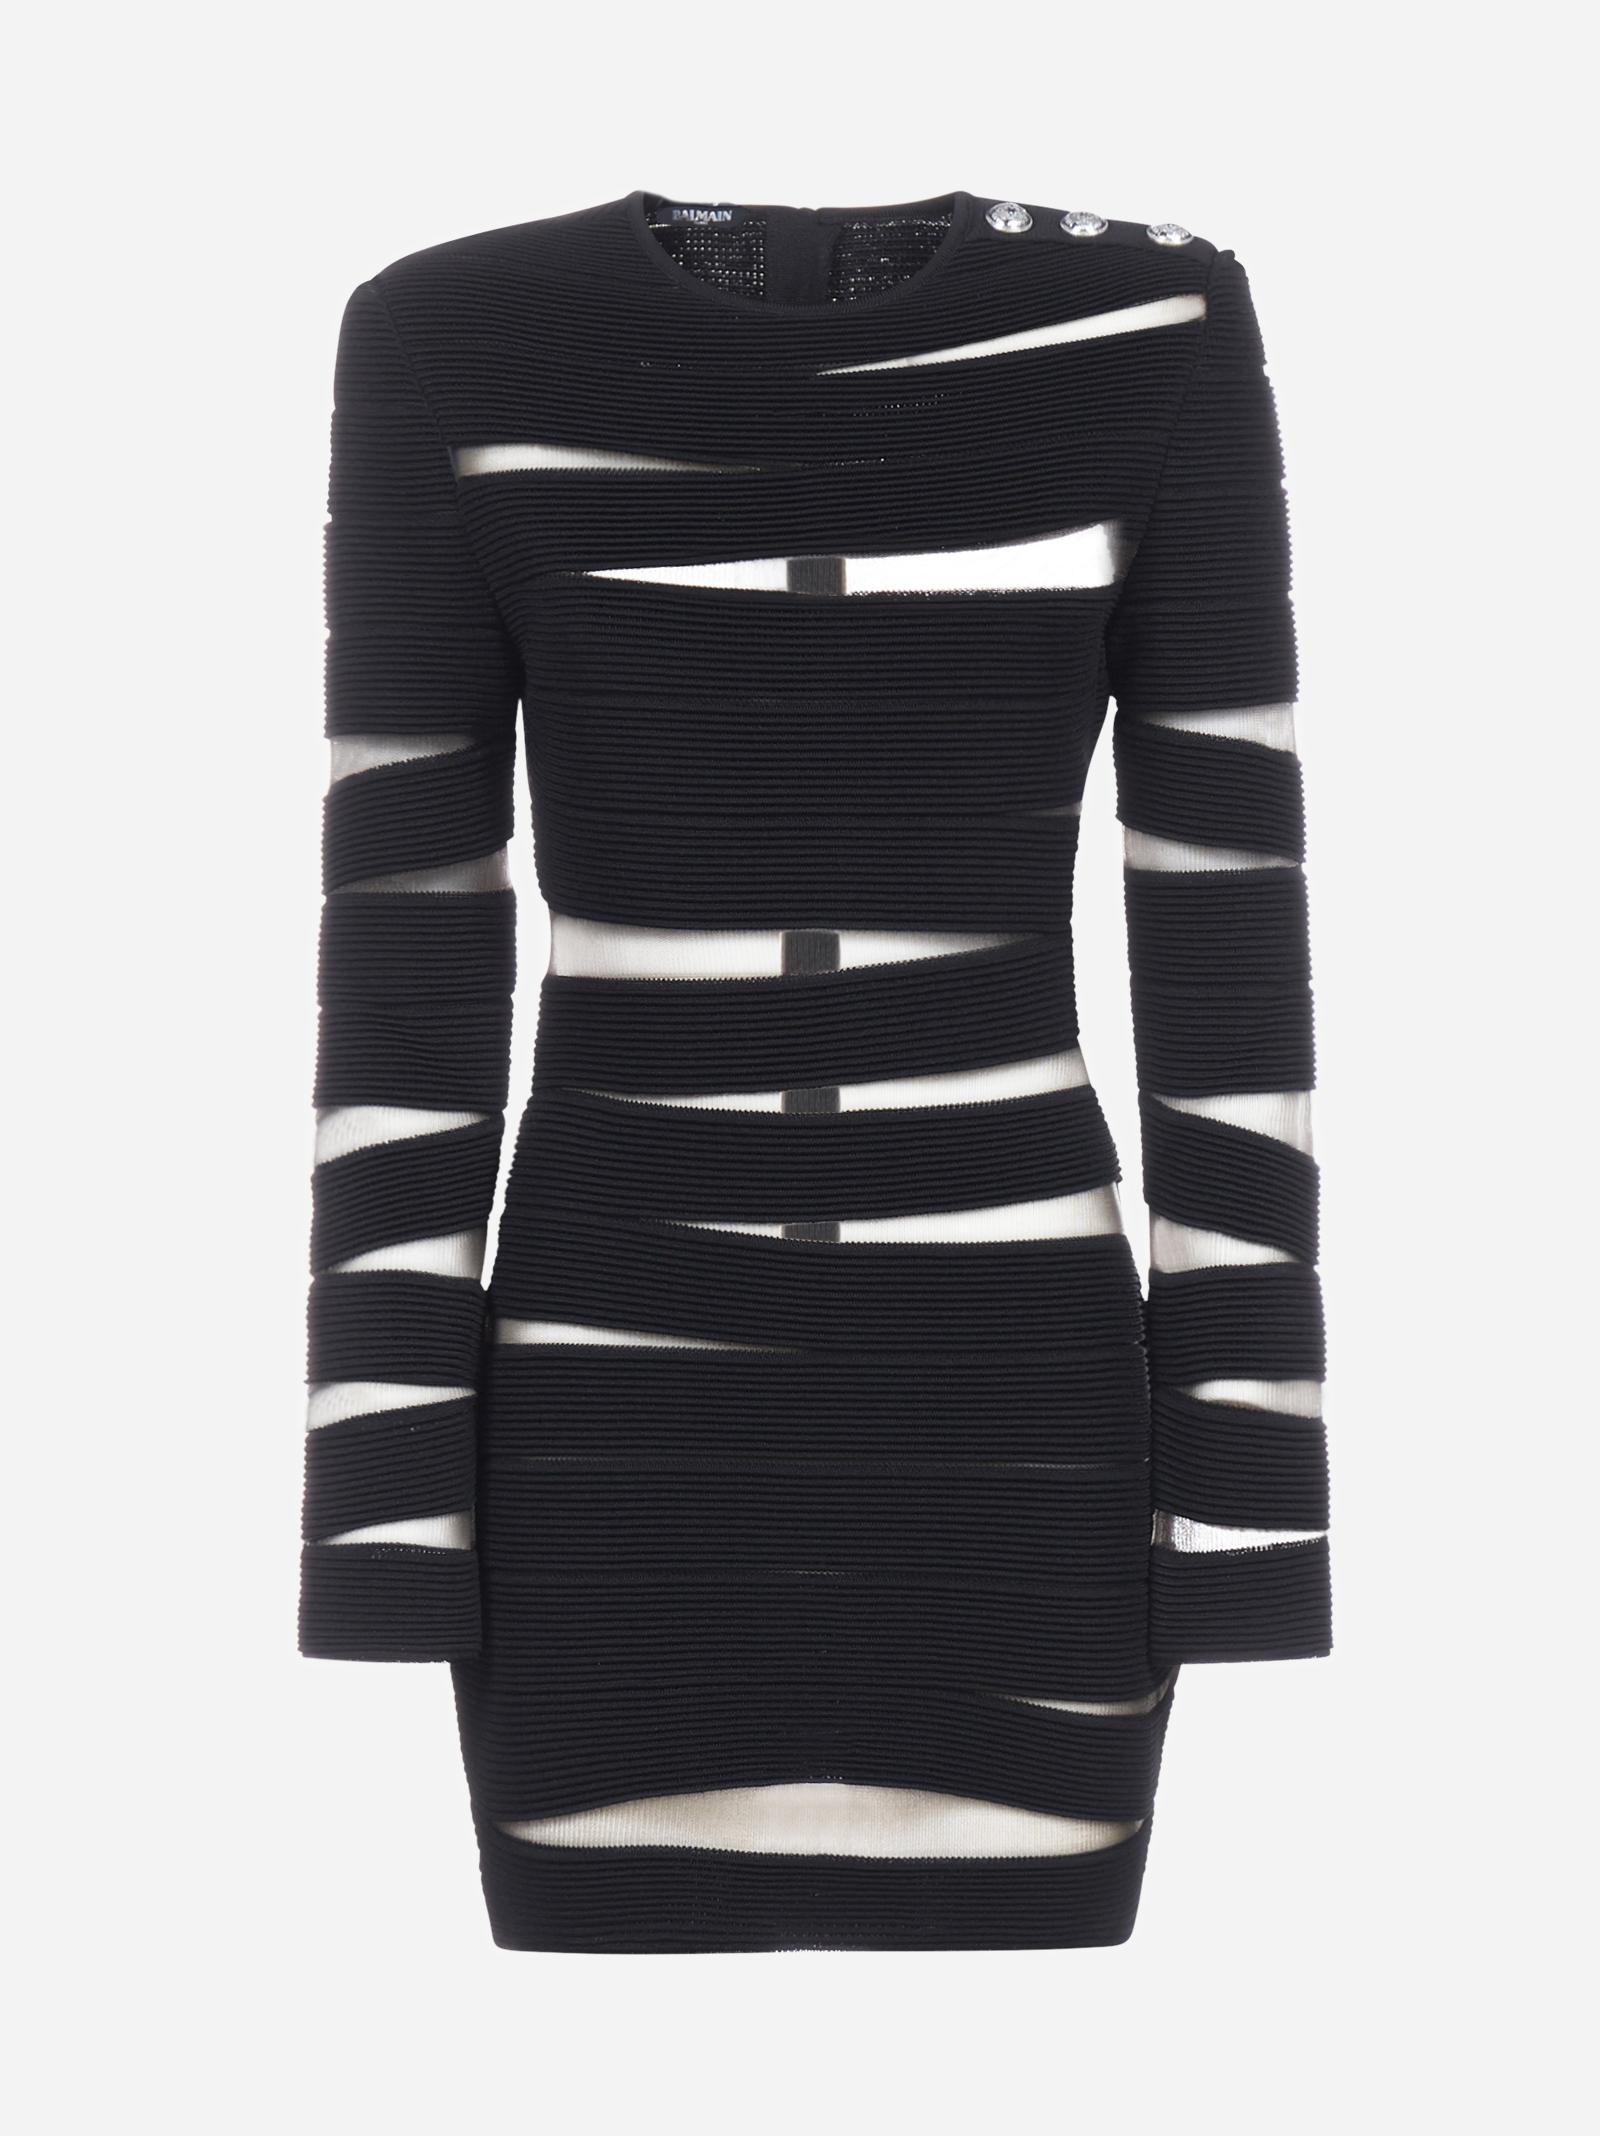 Balmain Synthetic Stripe Bandage Bodycon Dress in Black | Lyst